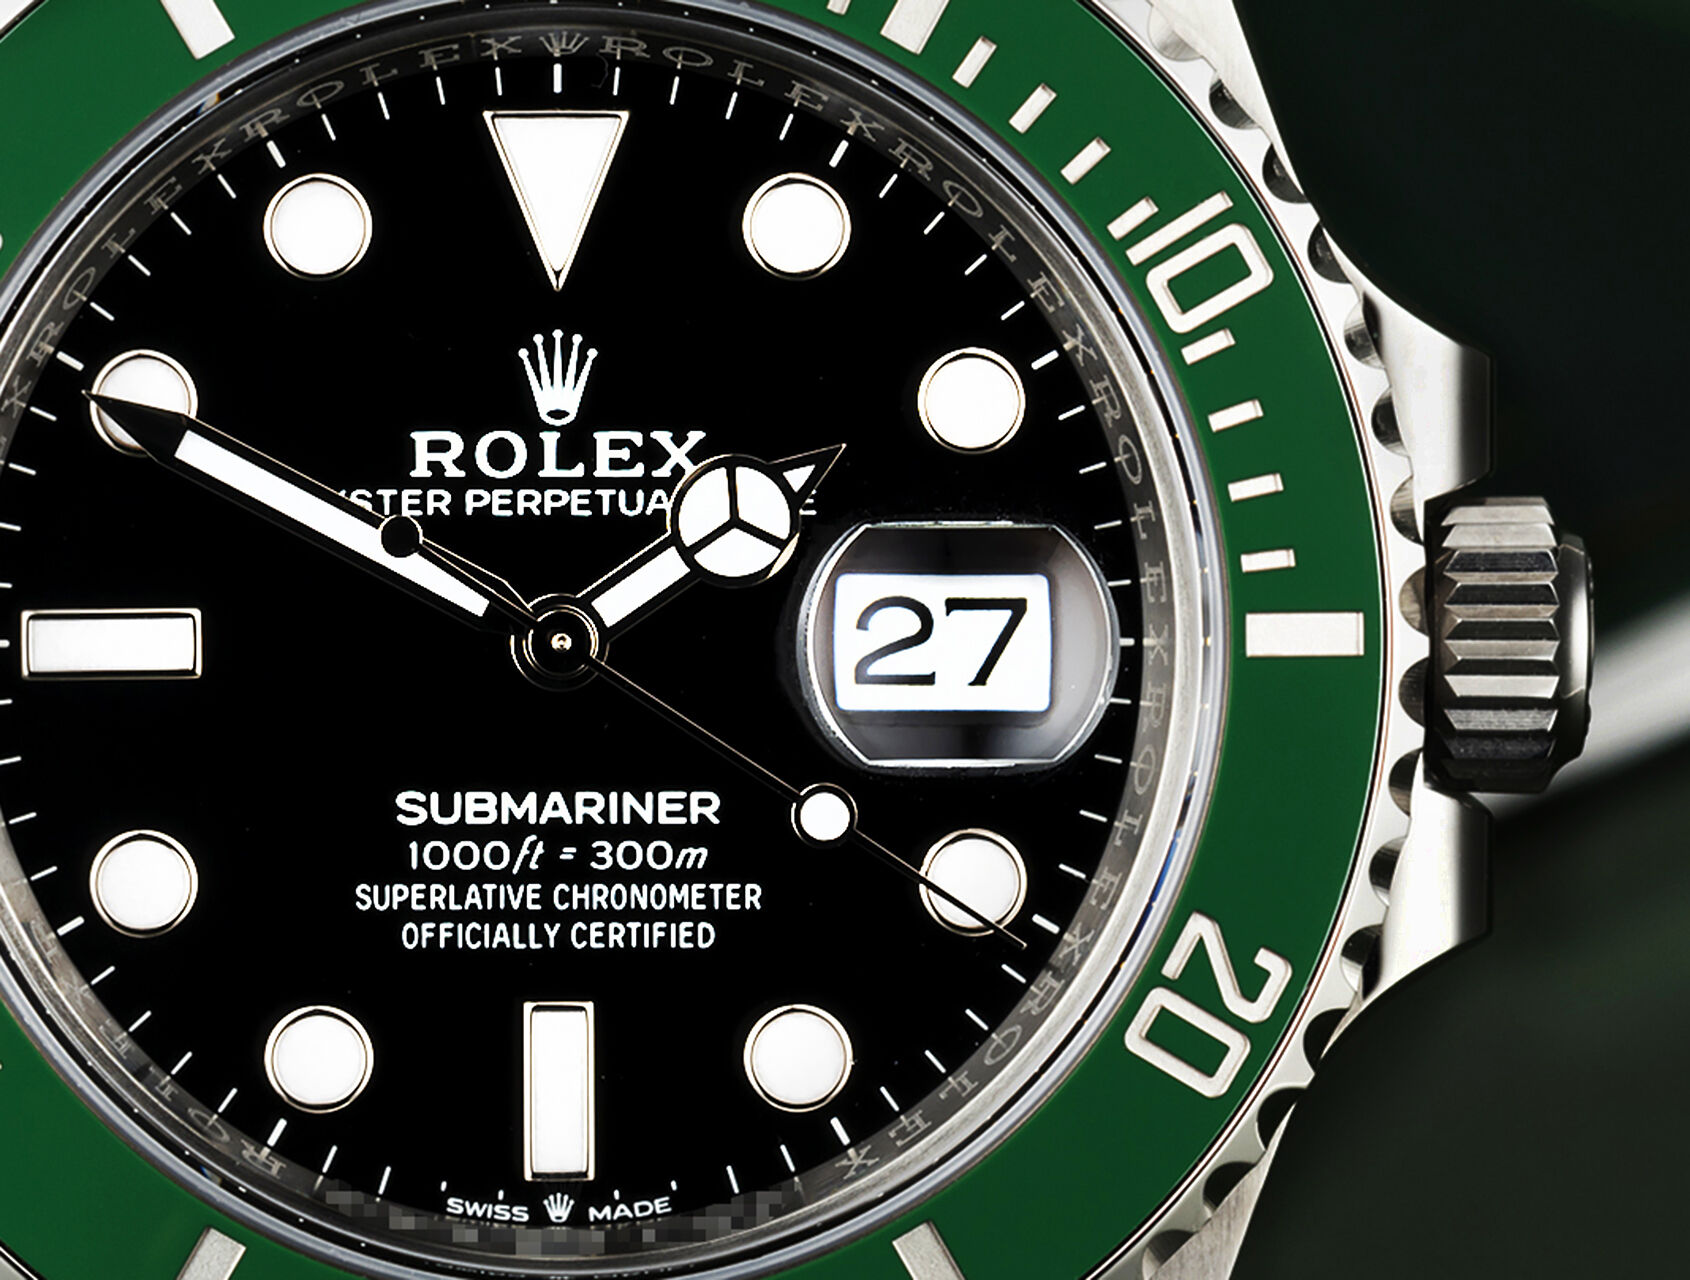 ref 126610LV | 126610LV - Box & Certificate | Rolex Submariner Date